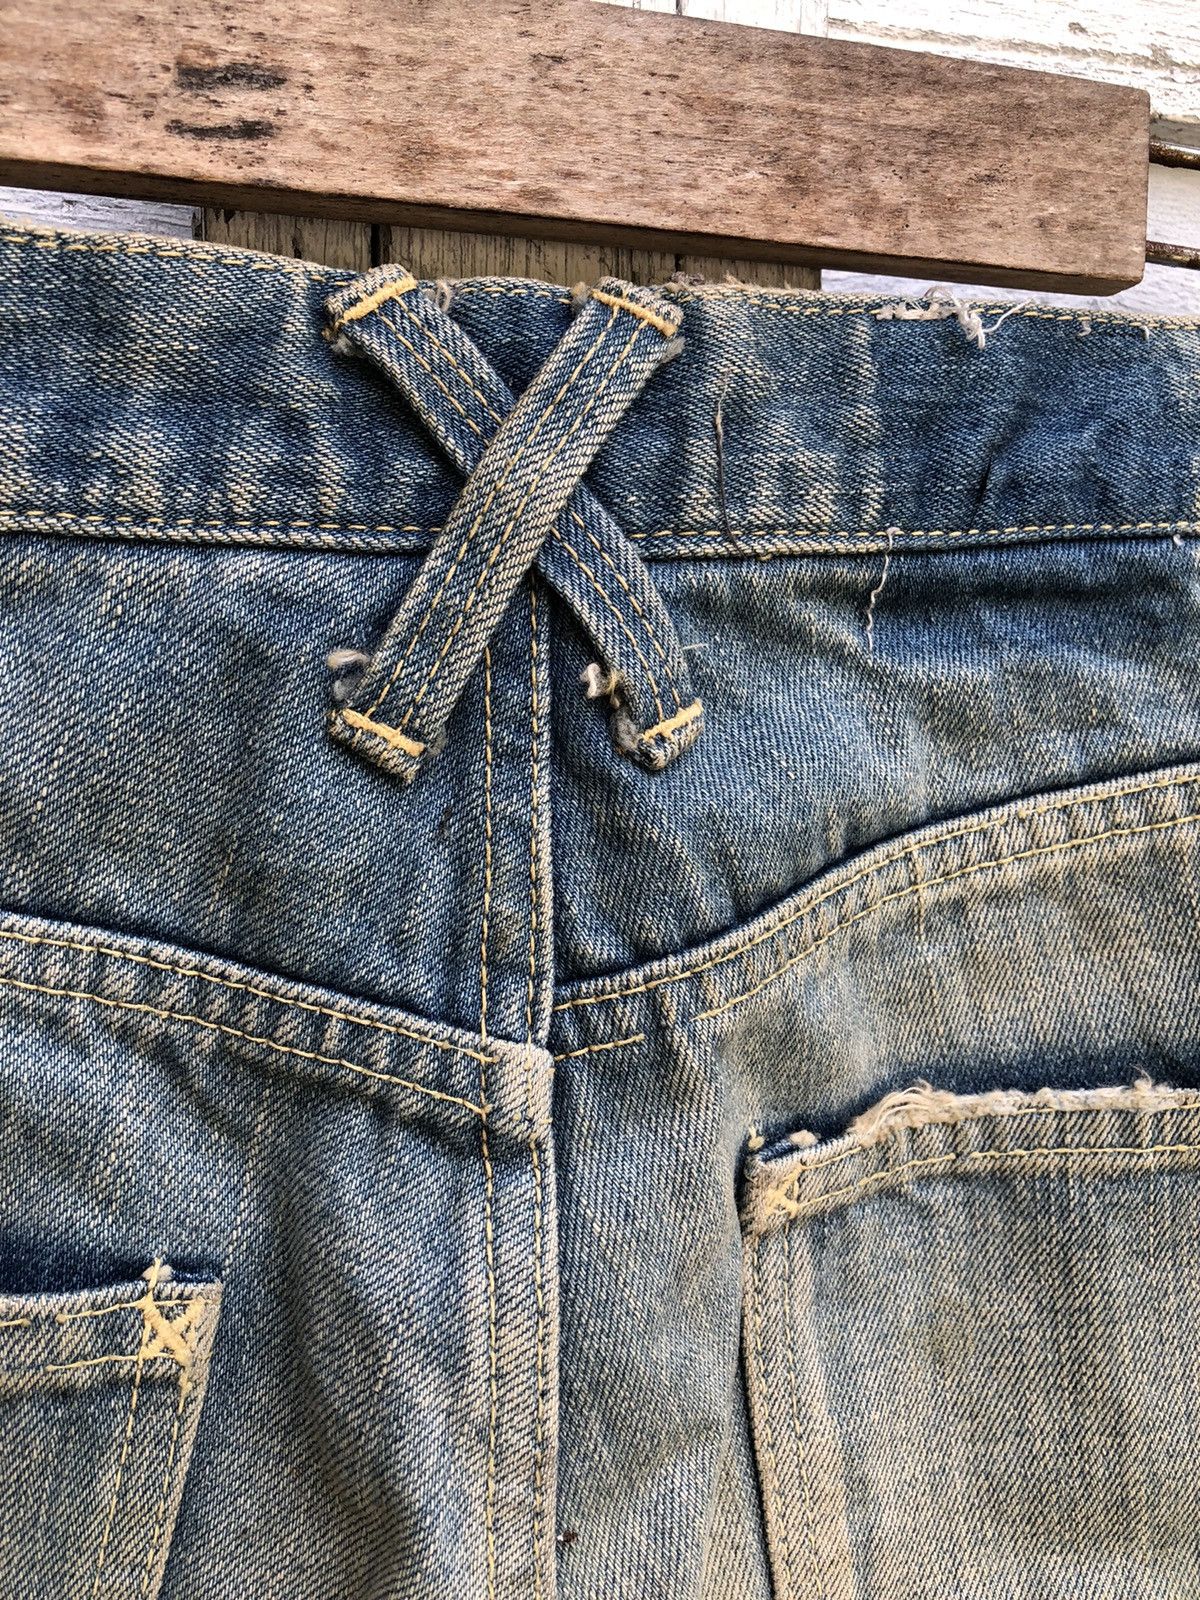 💯Felir💯Discovered Distressed Bush Pocket Pant Jean - 11